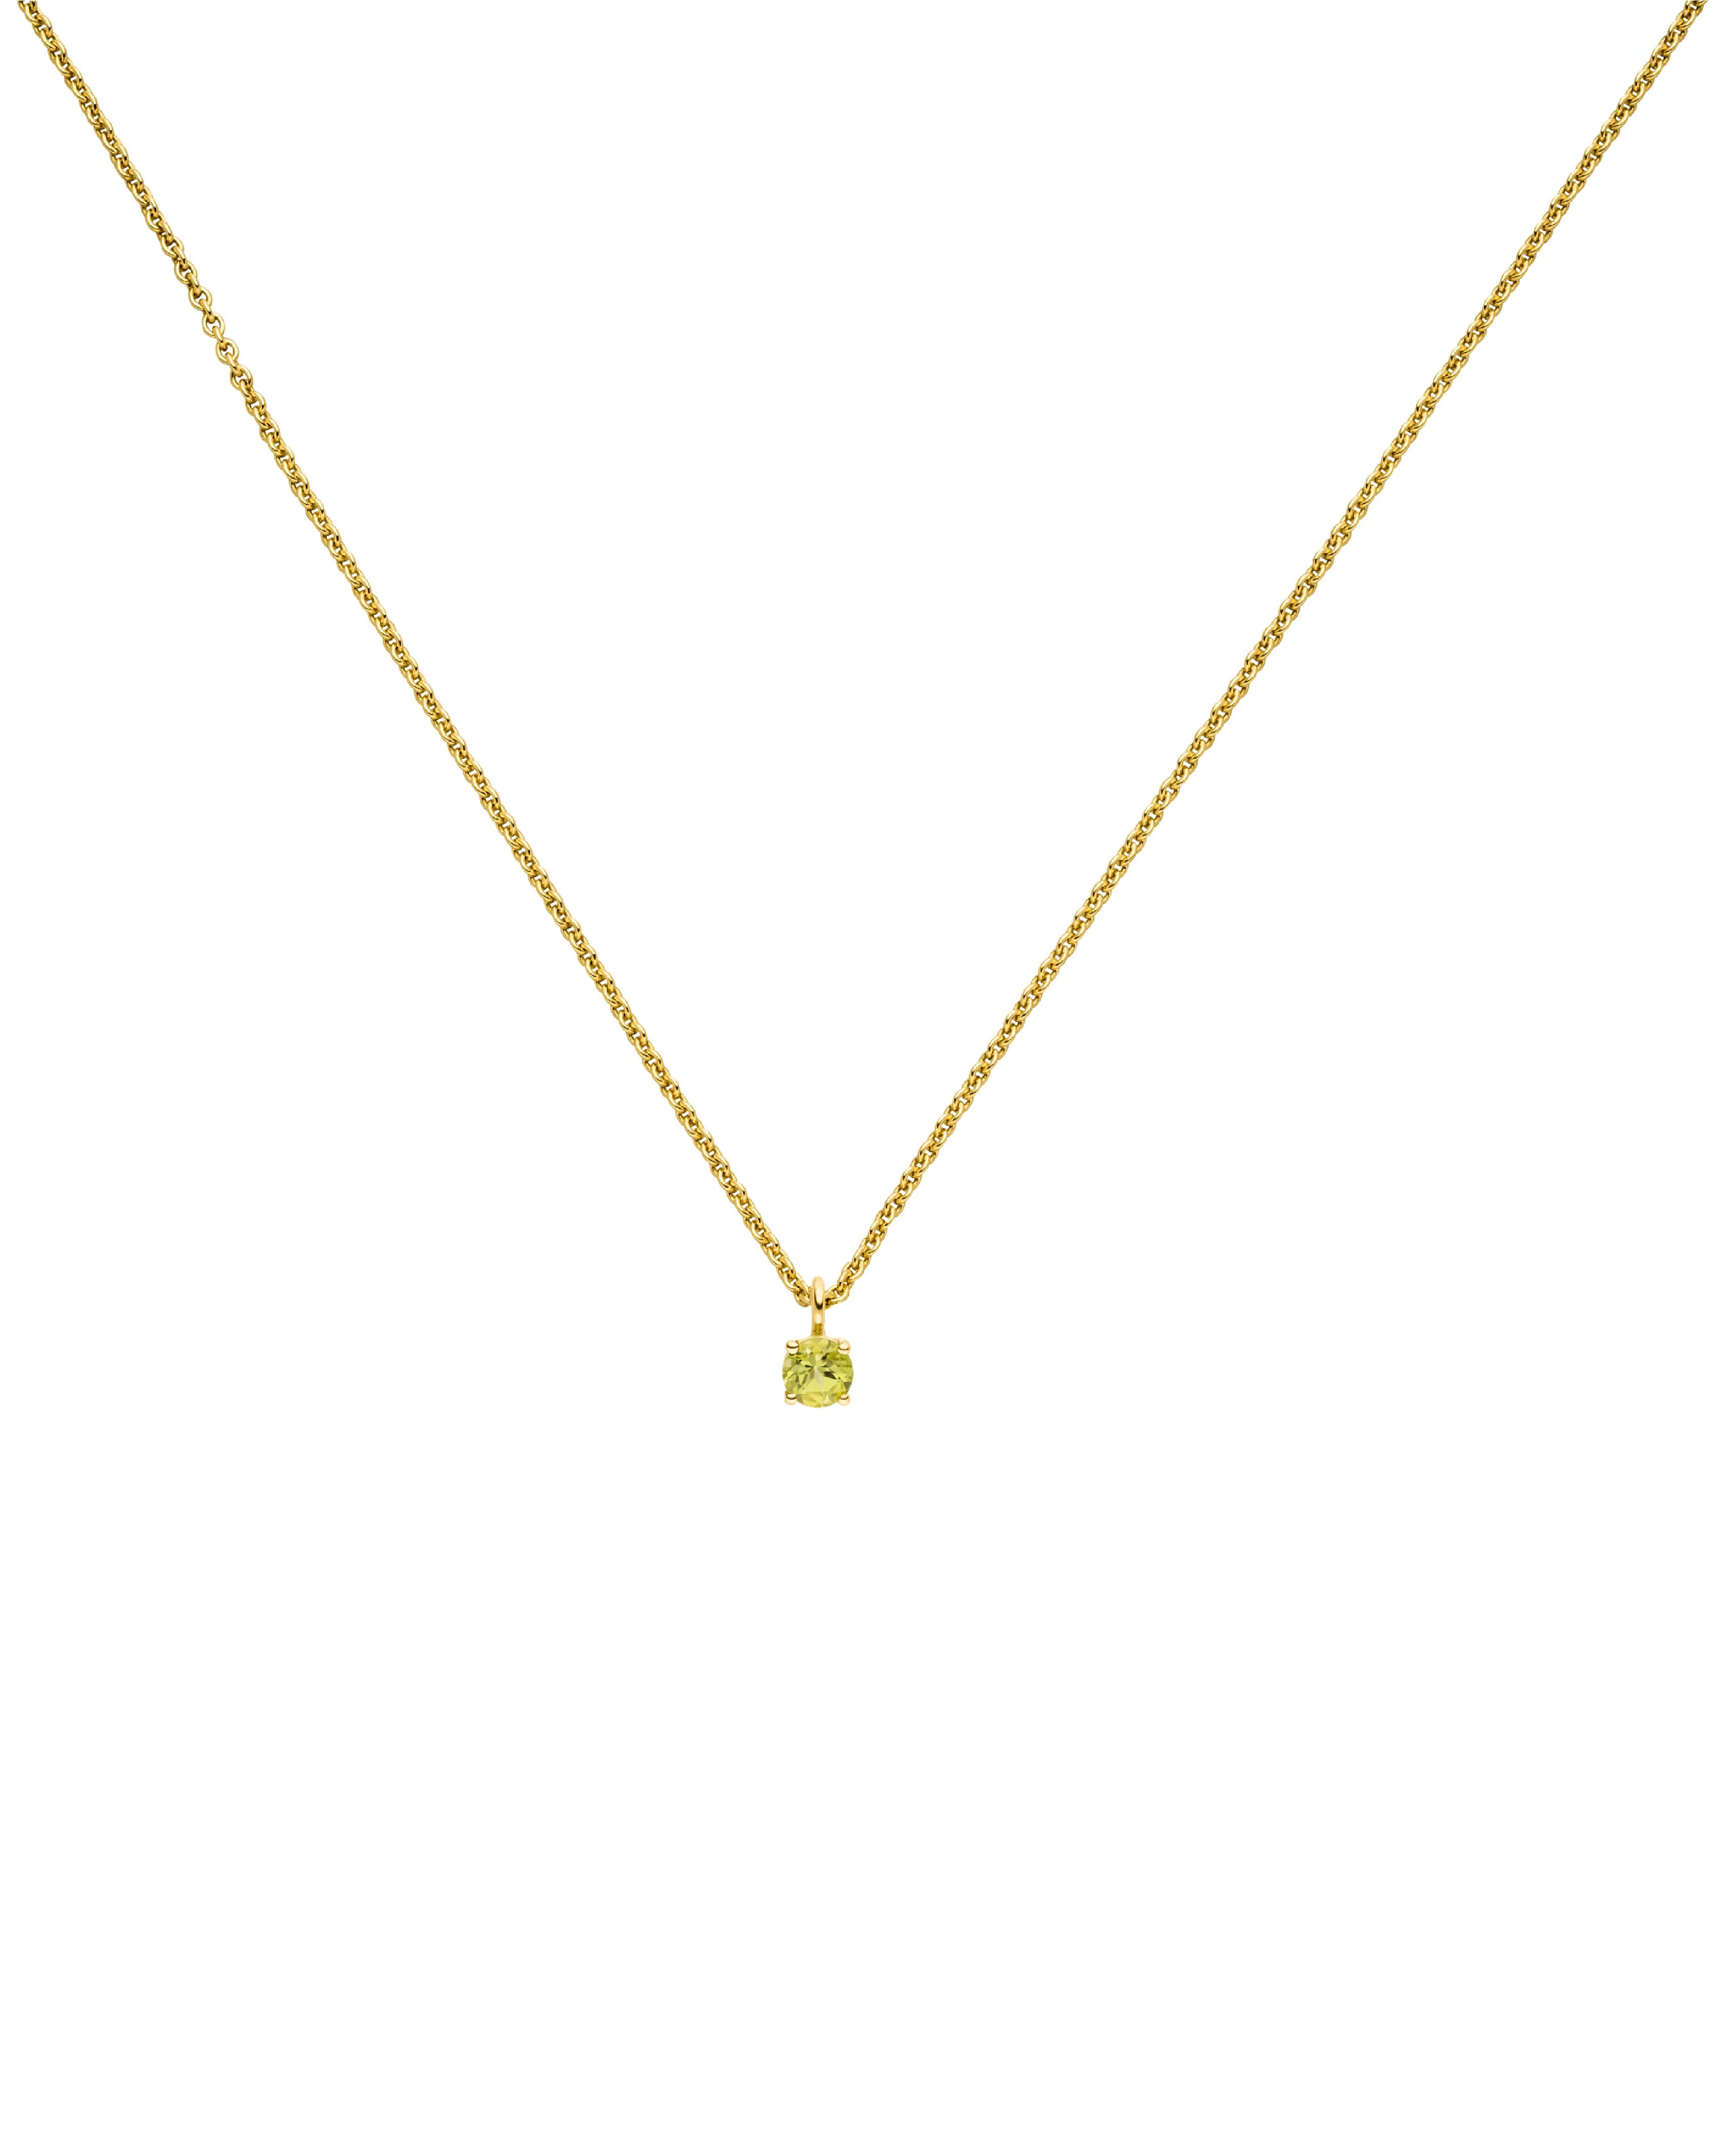 LALUZ - Halskette Gold - Gelbgold 585